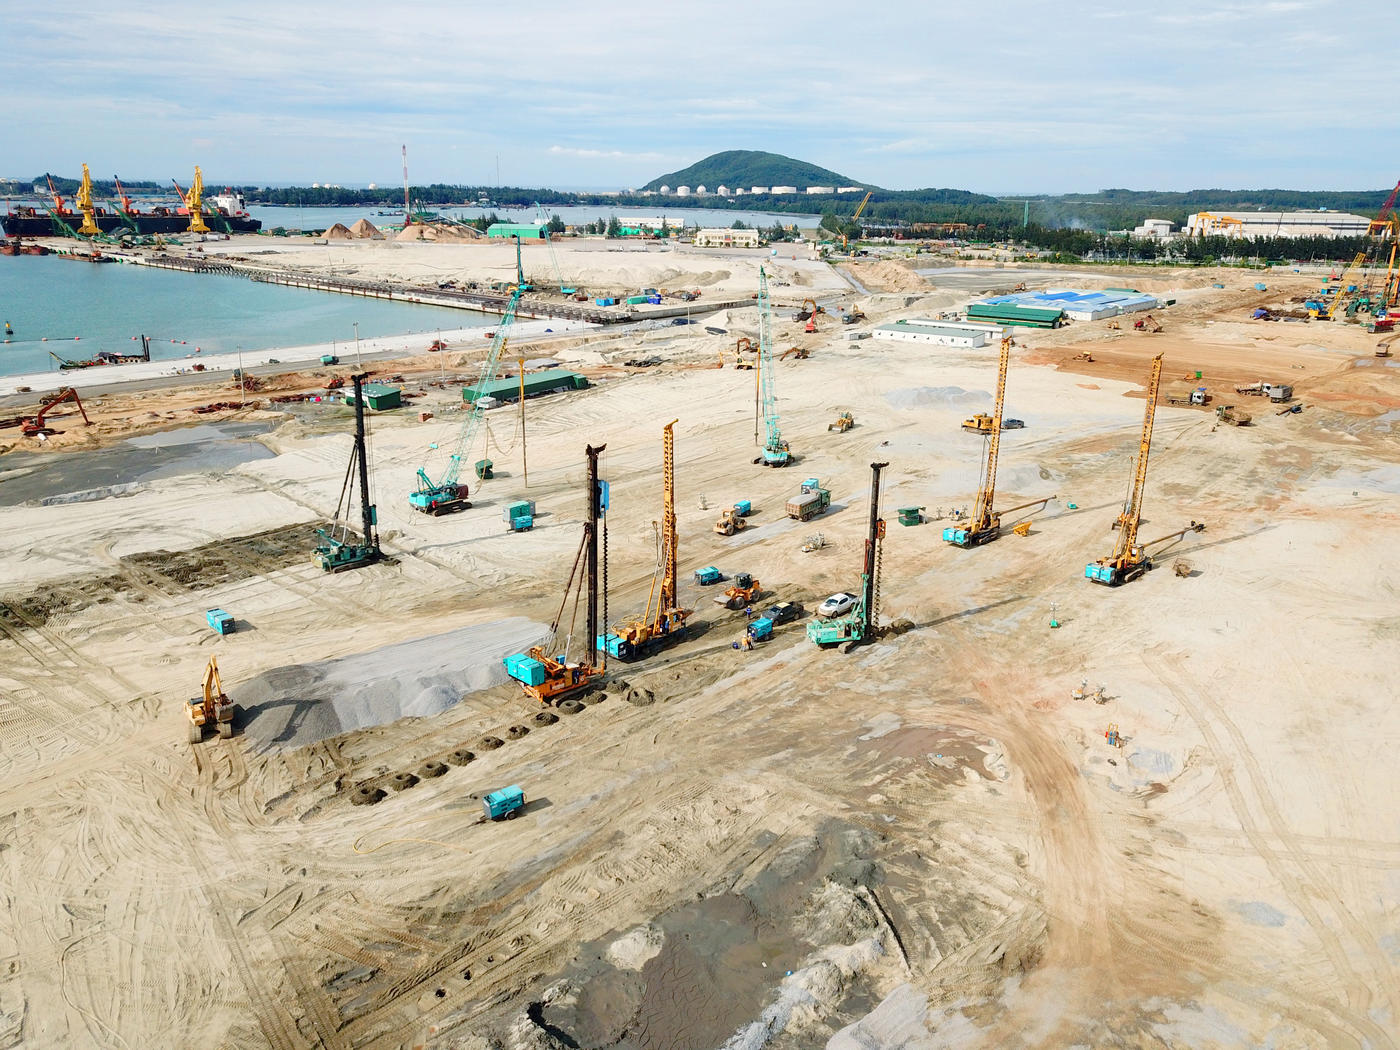 Keller ASEAN design and build solution for steel complex in Vietnam